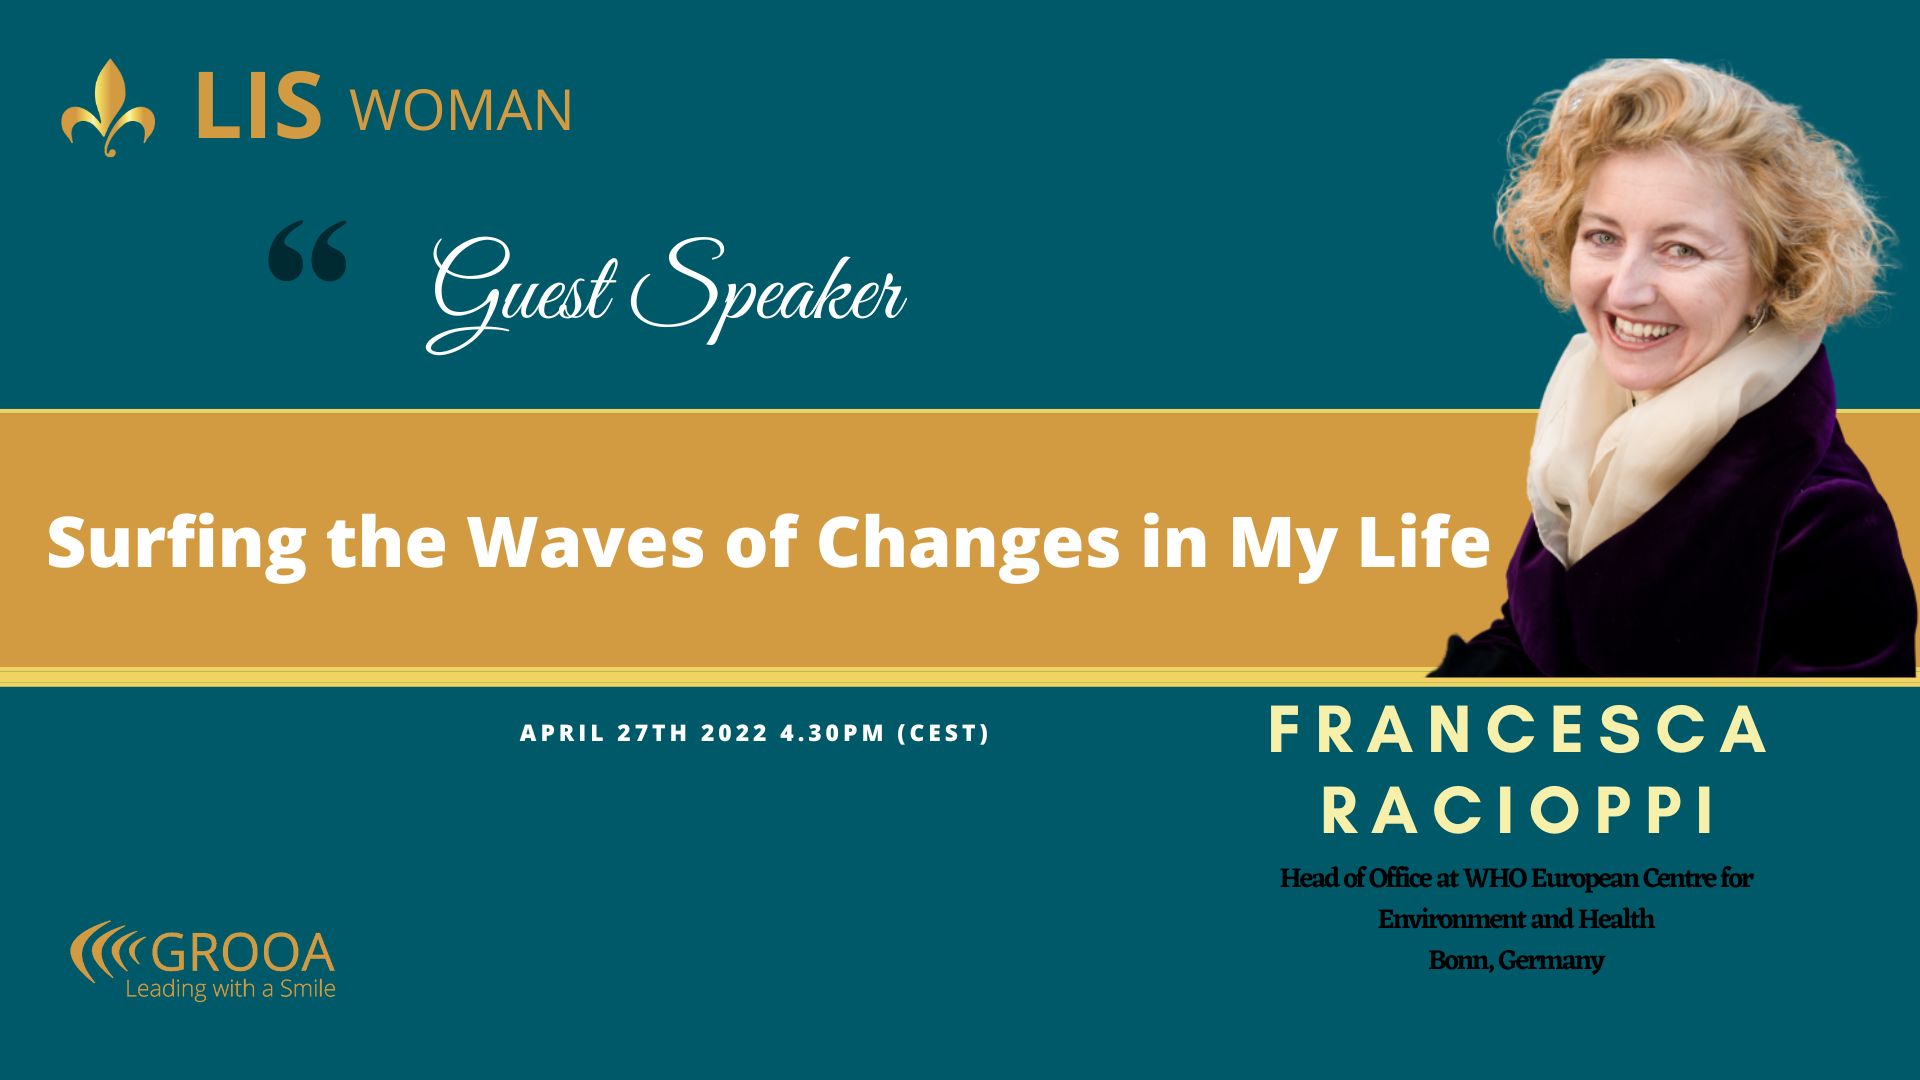 Francesca Racioppi Inspirational Speaker For LIS WOMAN Grooa